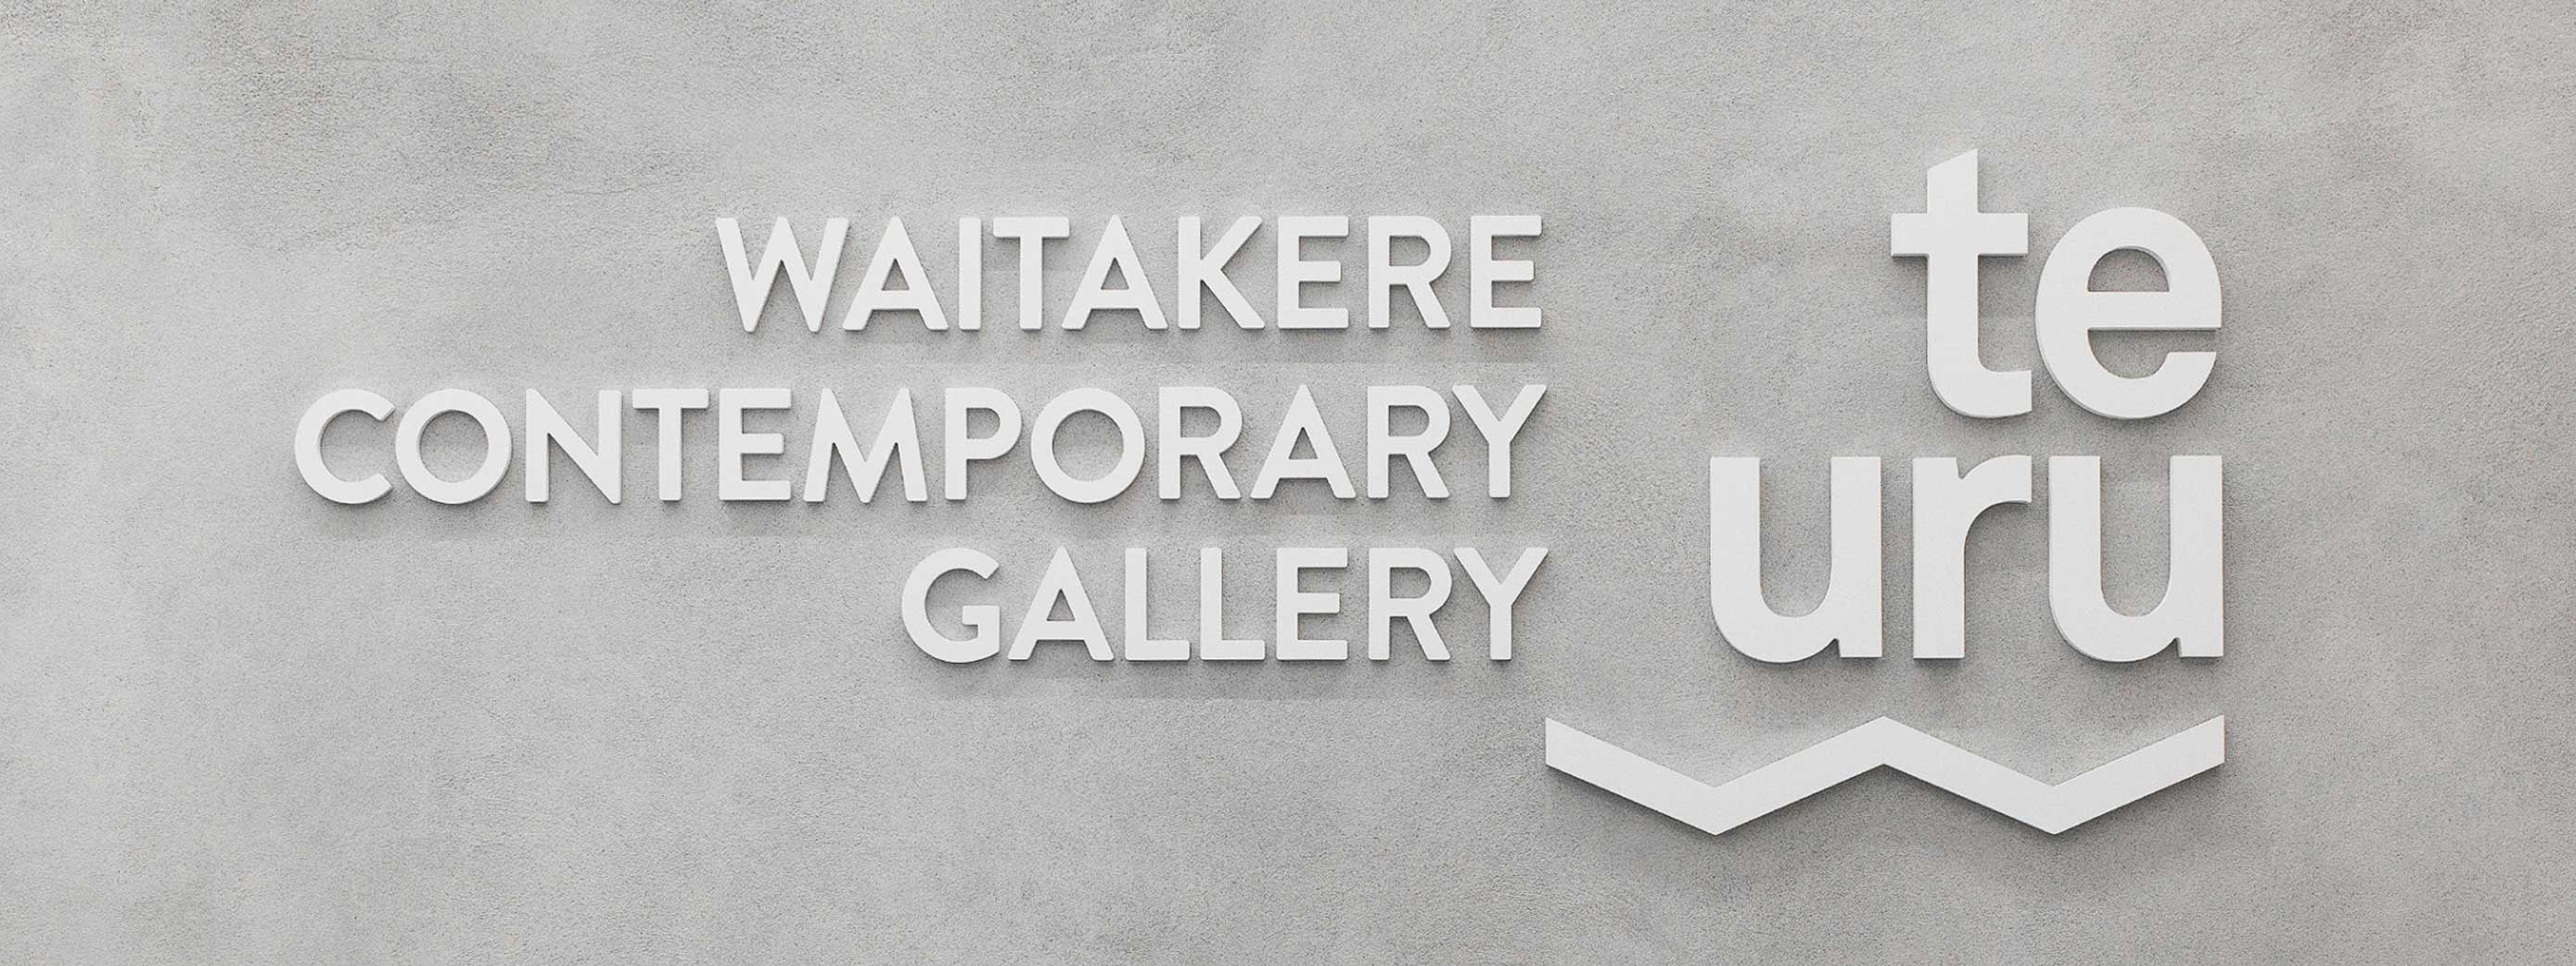 Waitakere Contemporary Gallery logo alongside the Te Uru logo 